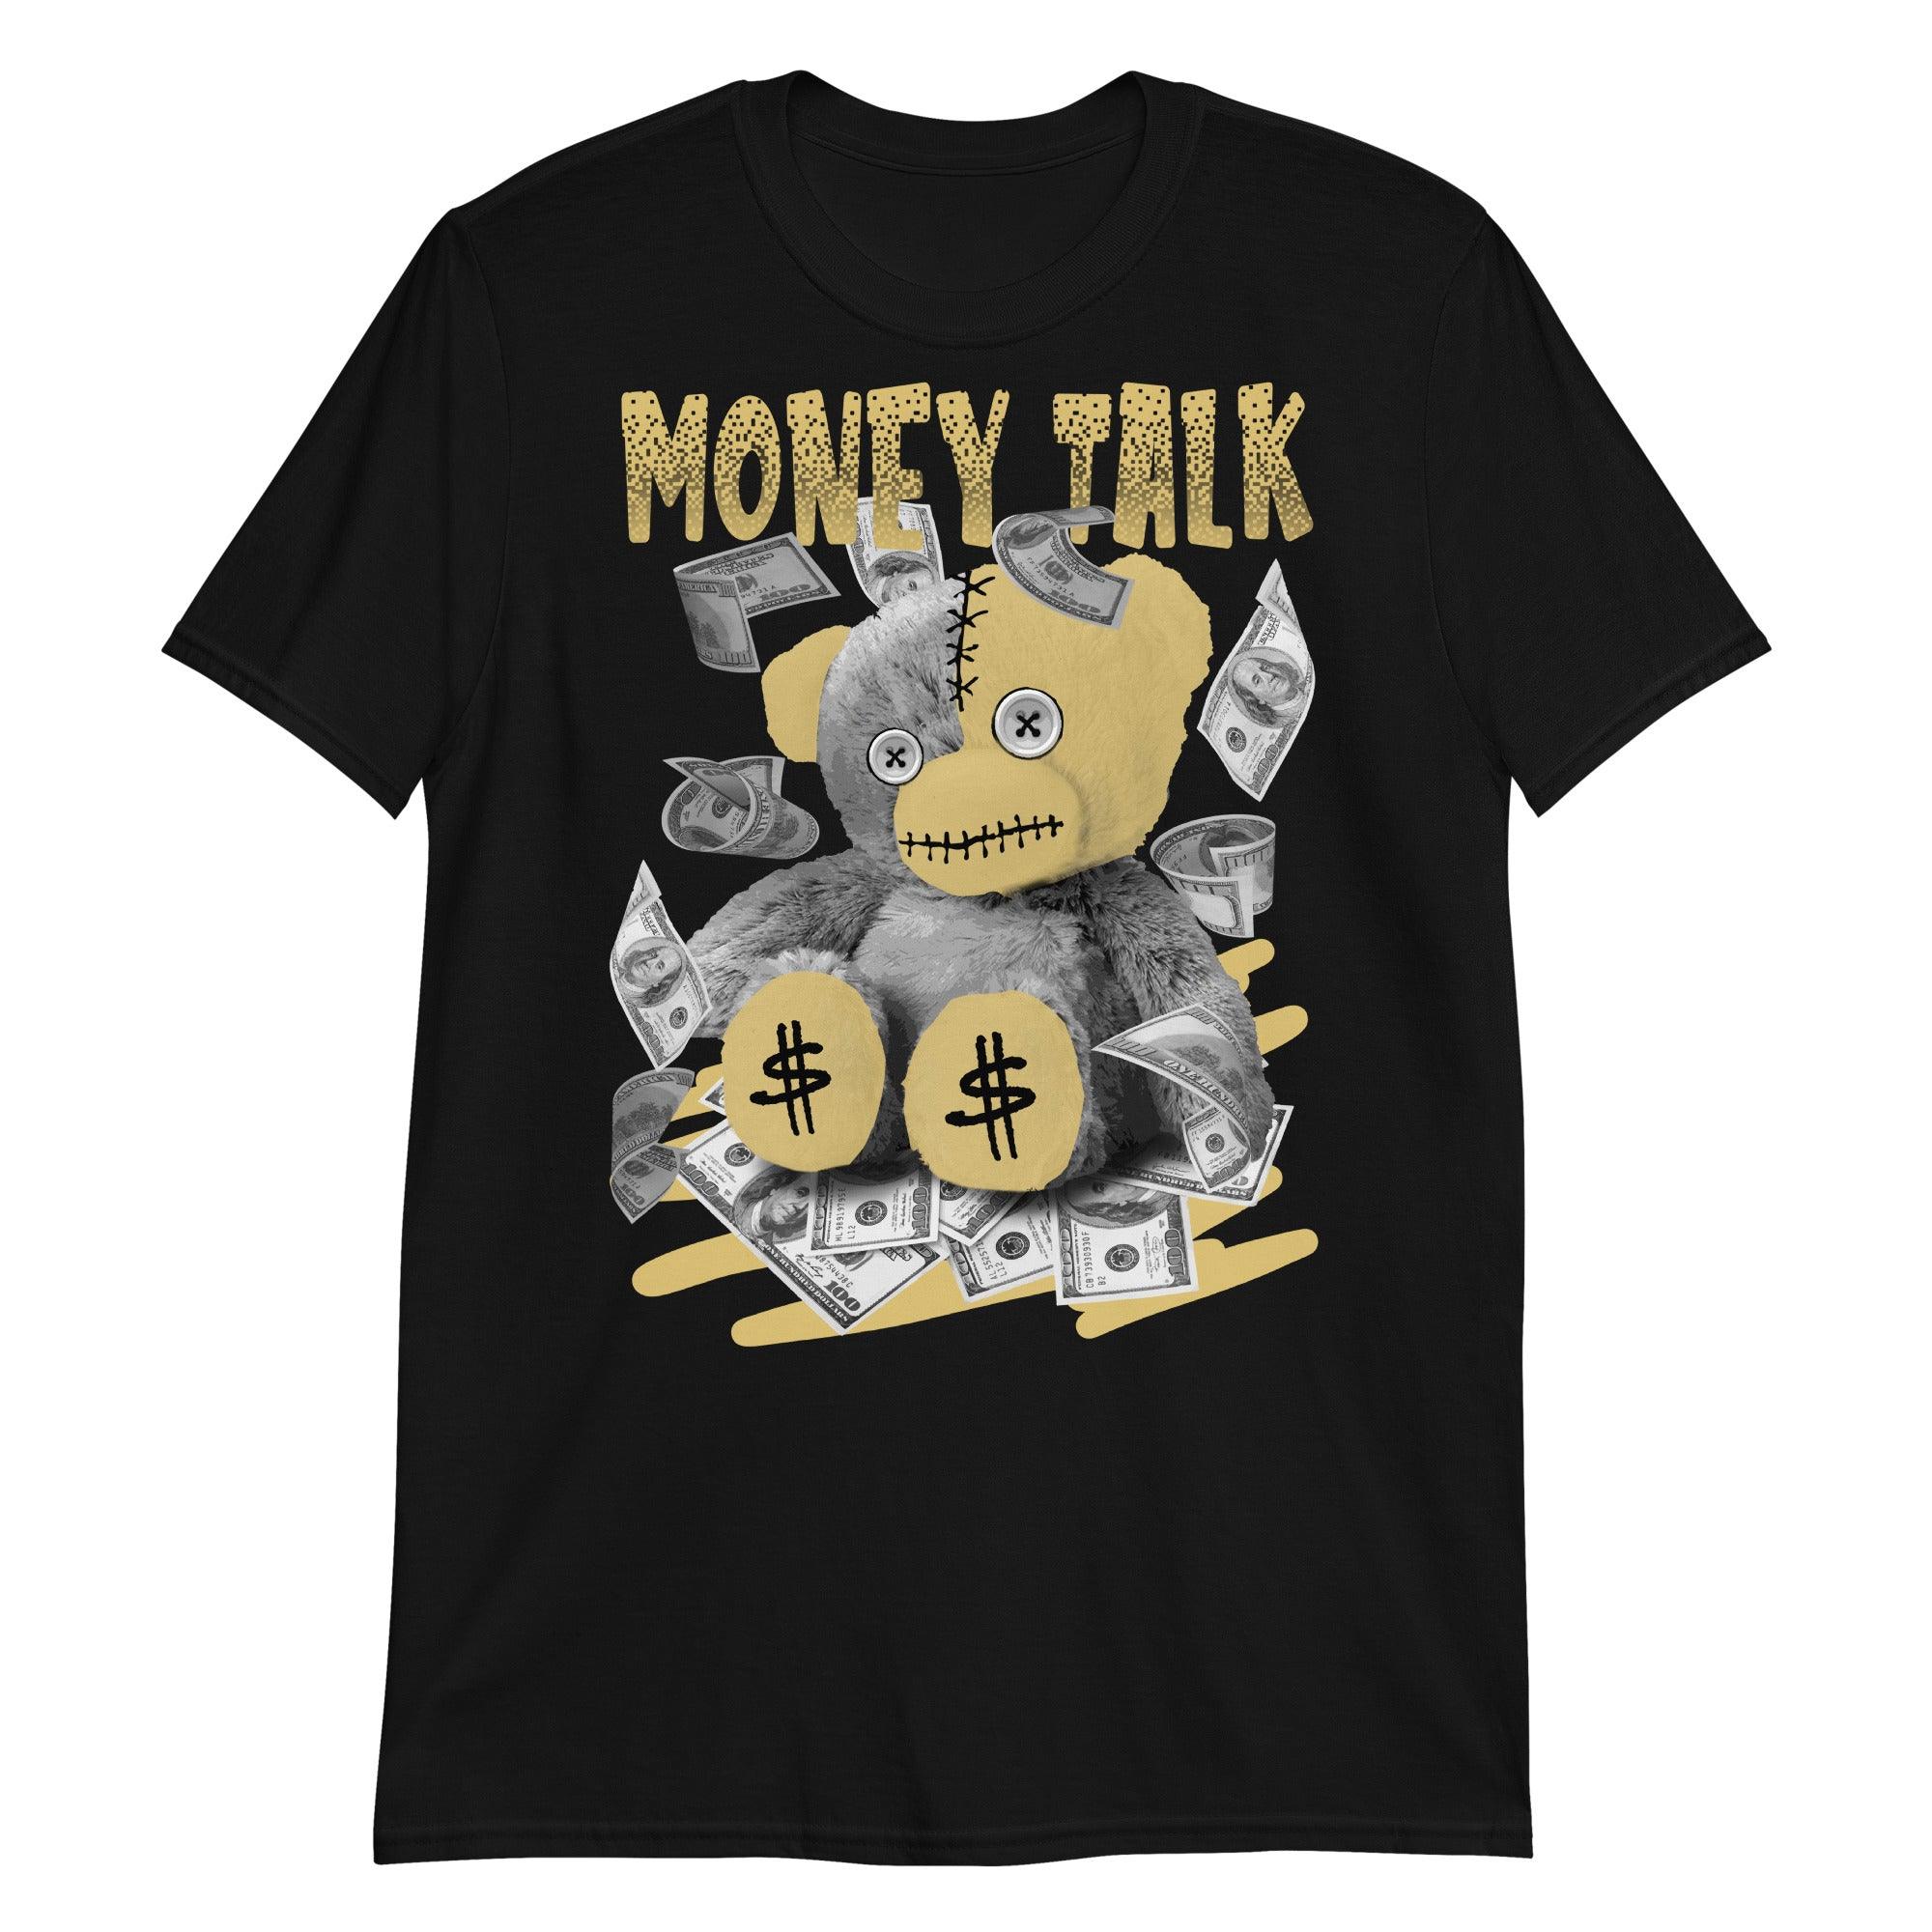 Black Money Talk Shirt AJ 1 Retro High Pollen photo